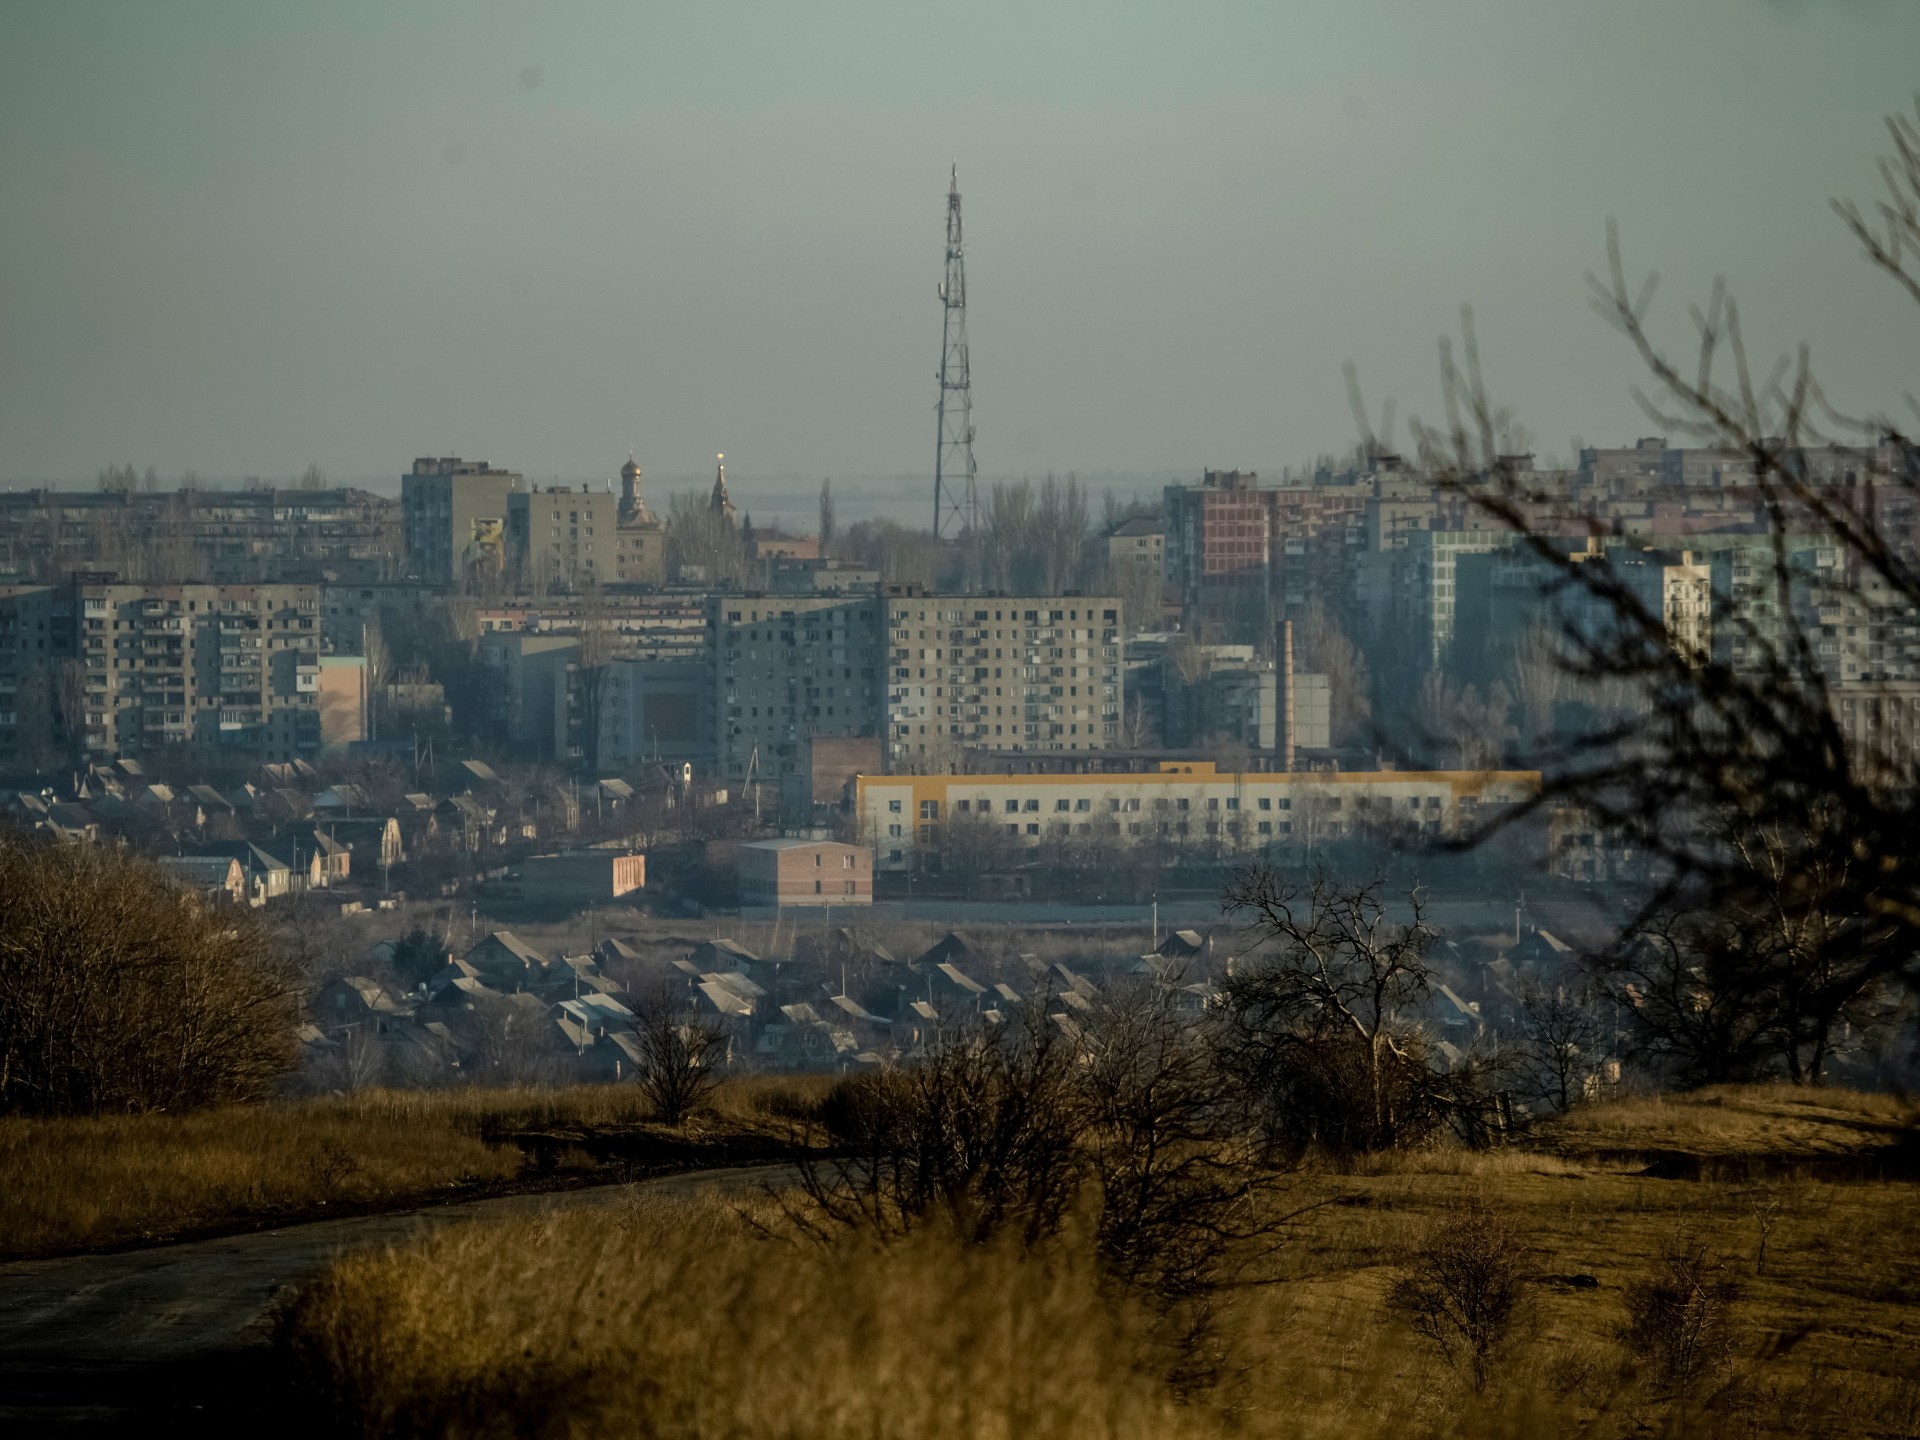 Russia claims village near embattled Ukrainian city of Bakhmut